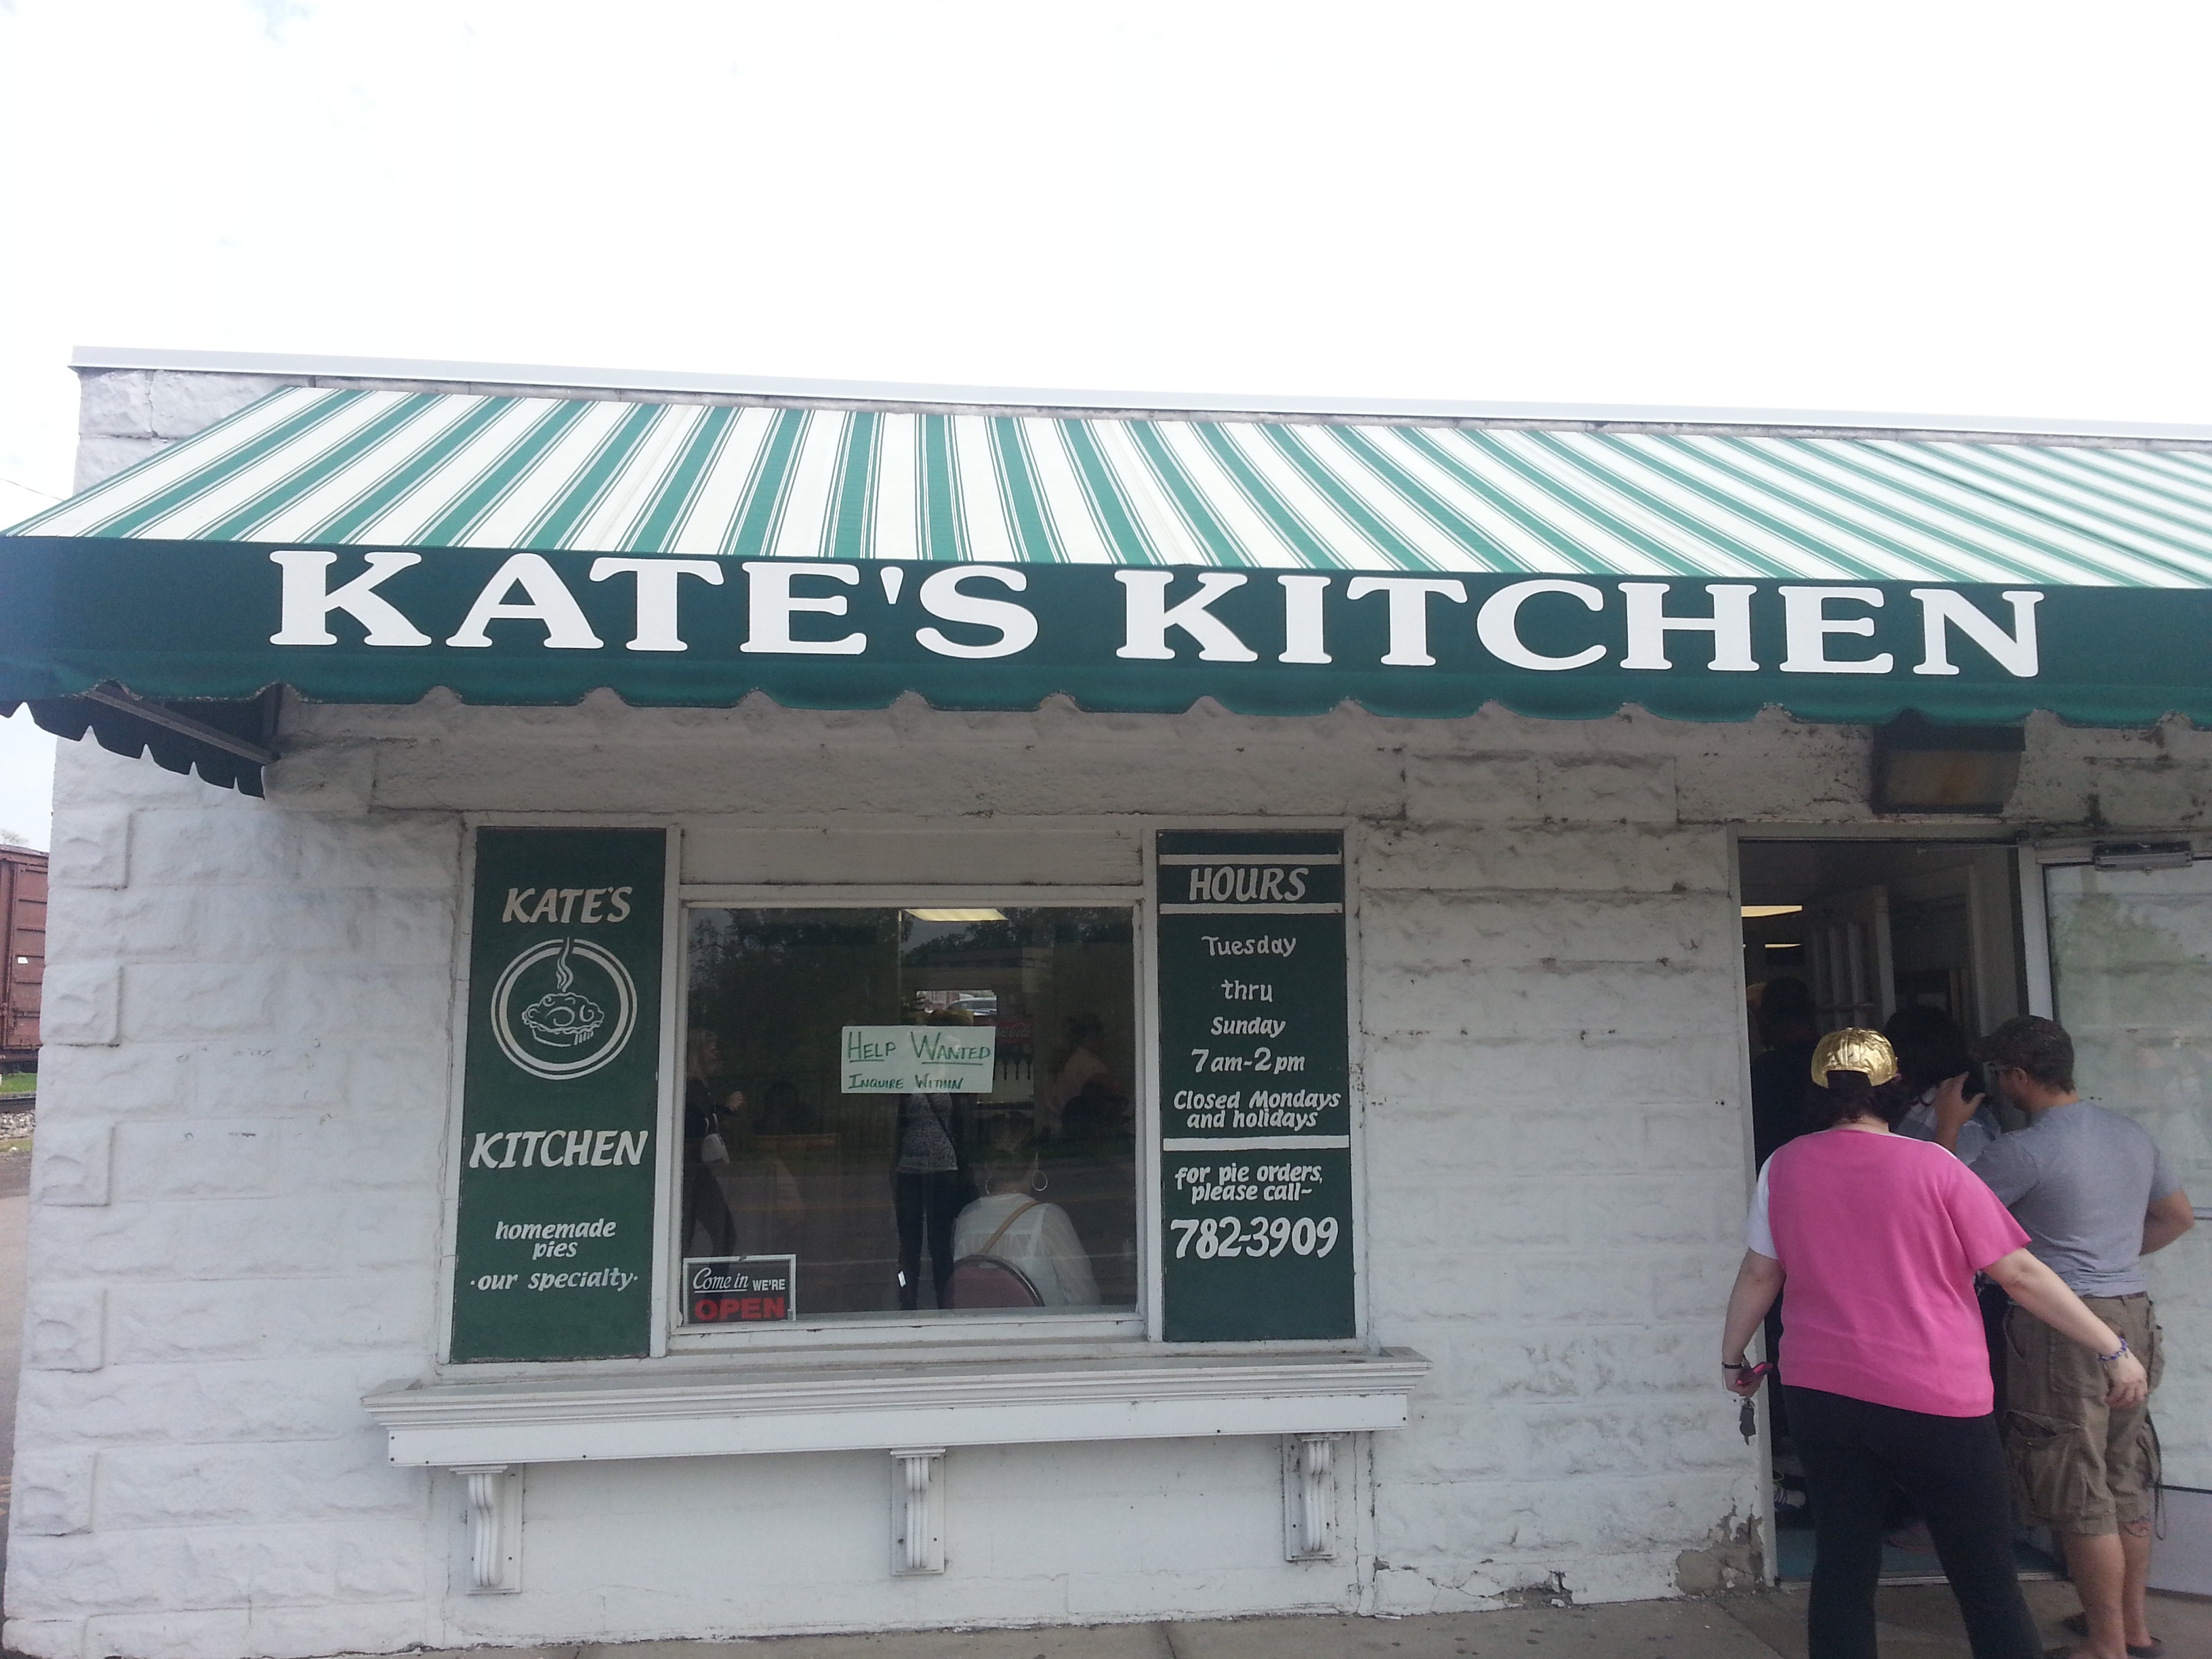 Today on the Bite Tonight: Kate’s Kitchen